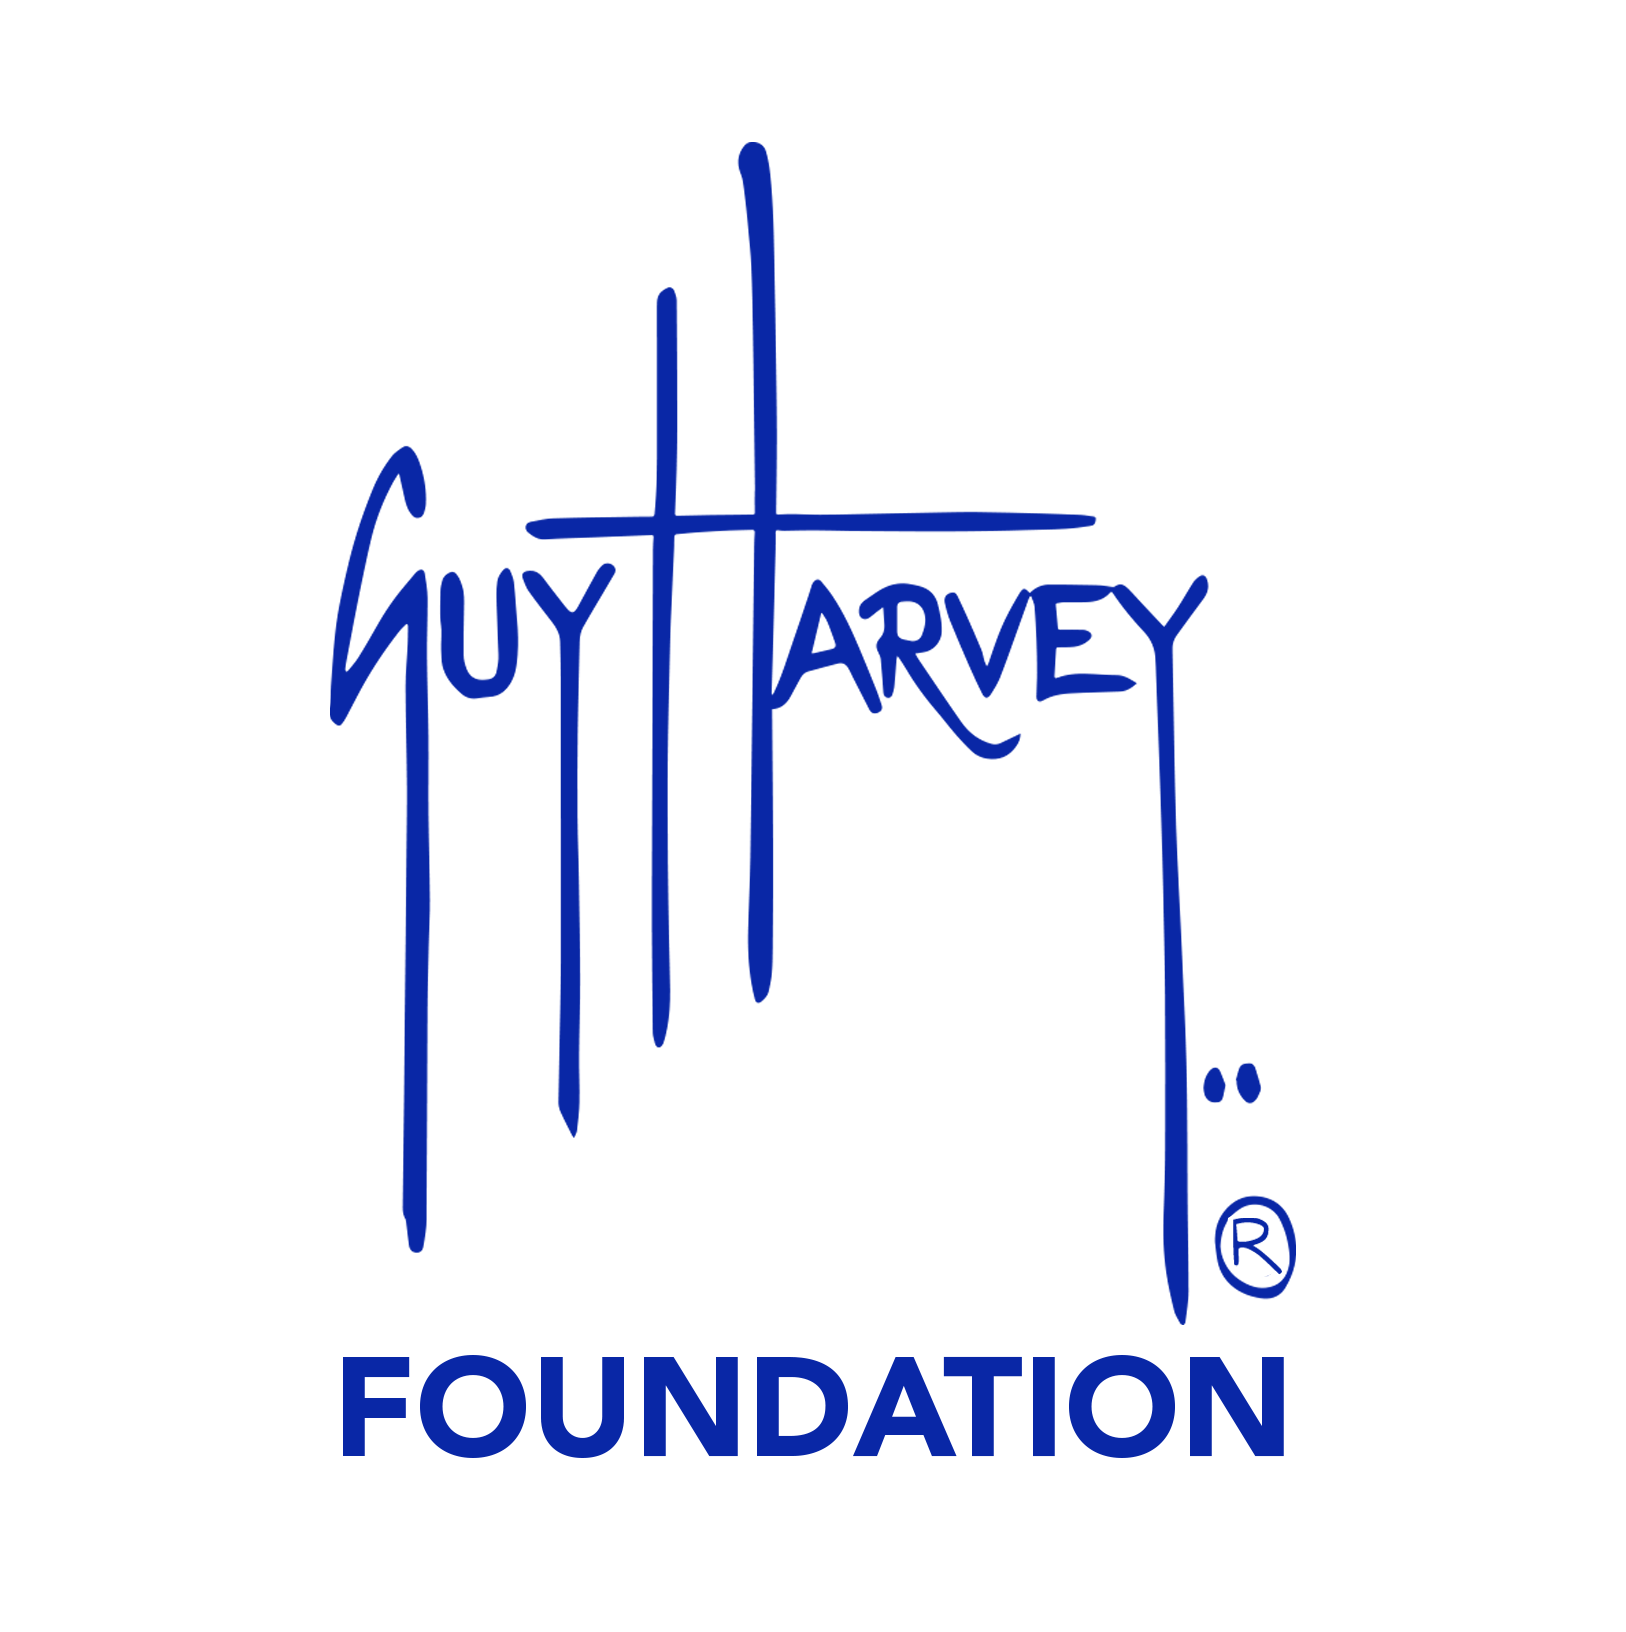 GHF - Guy Harvey Foundation